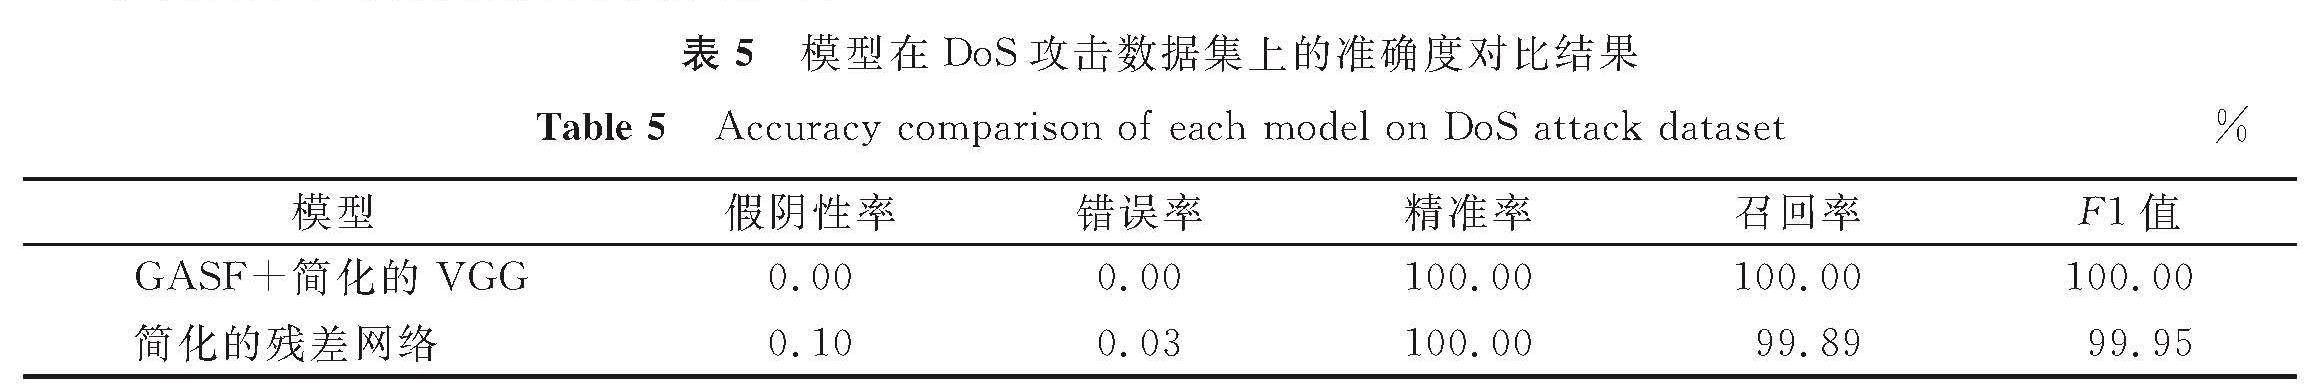 表5 模型在DoS攻击数据集上的准确度对比结果<br/>Table 5 Accuracy comparison of each model on DoS attack dataset%